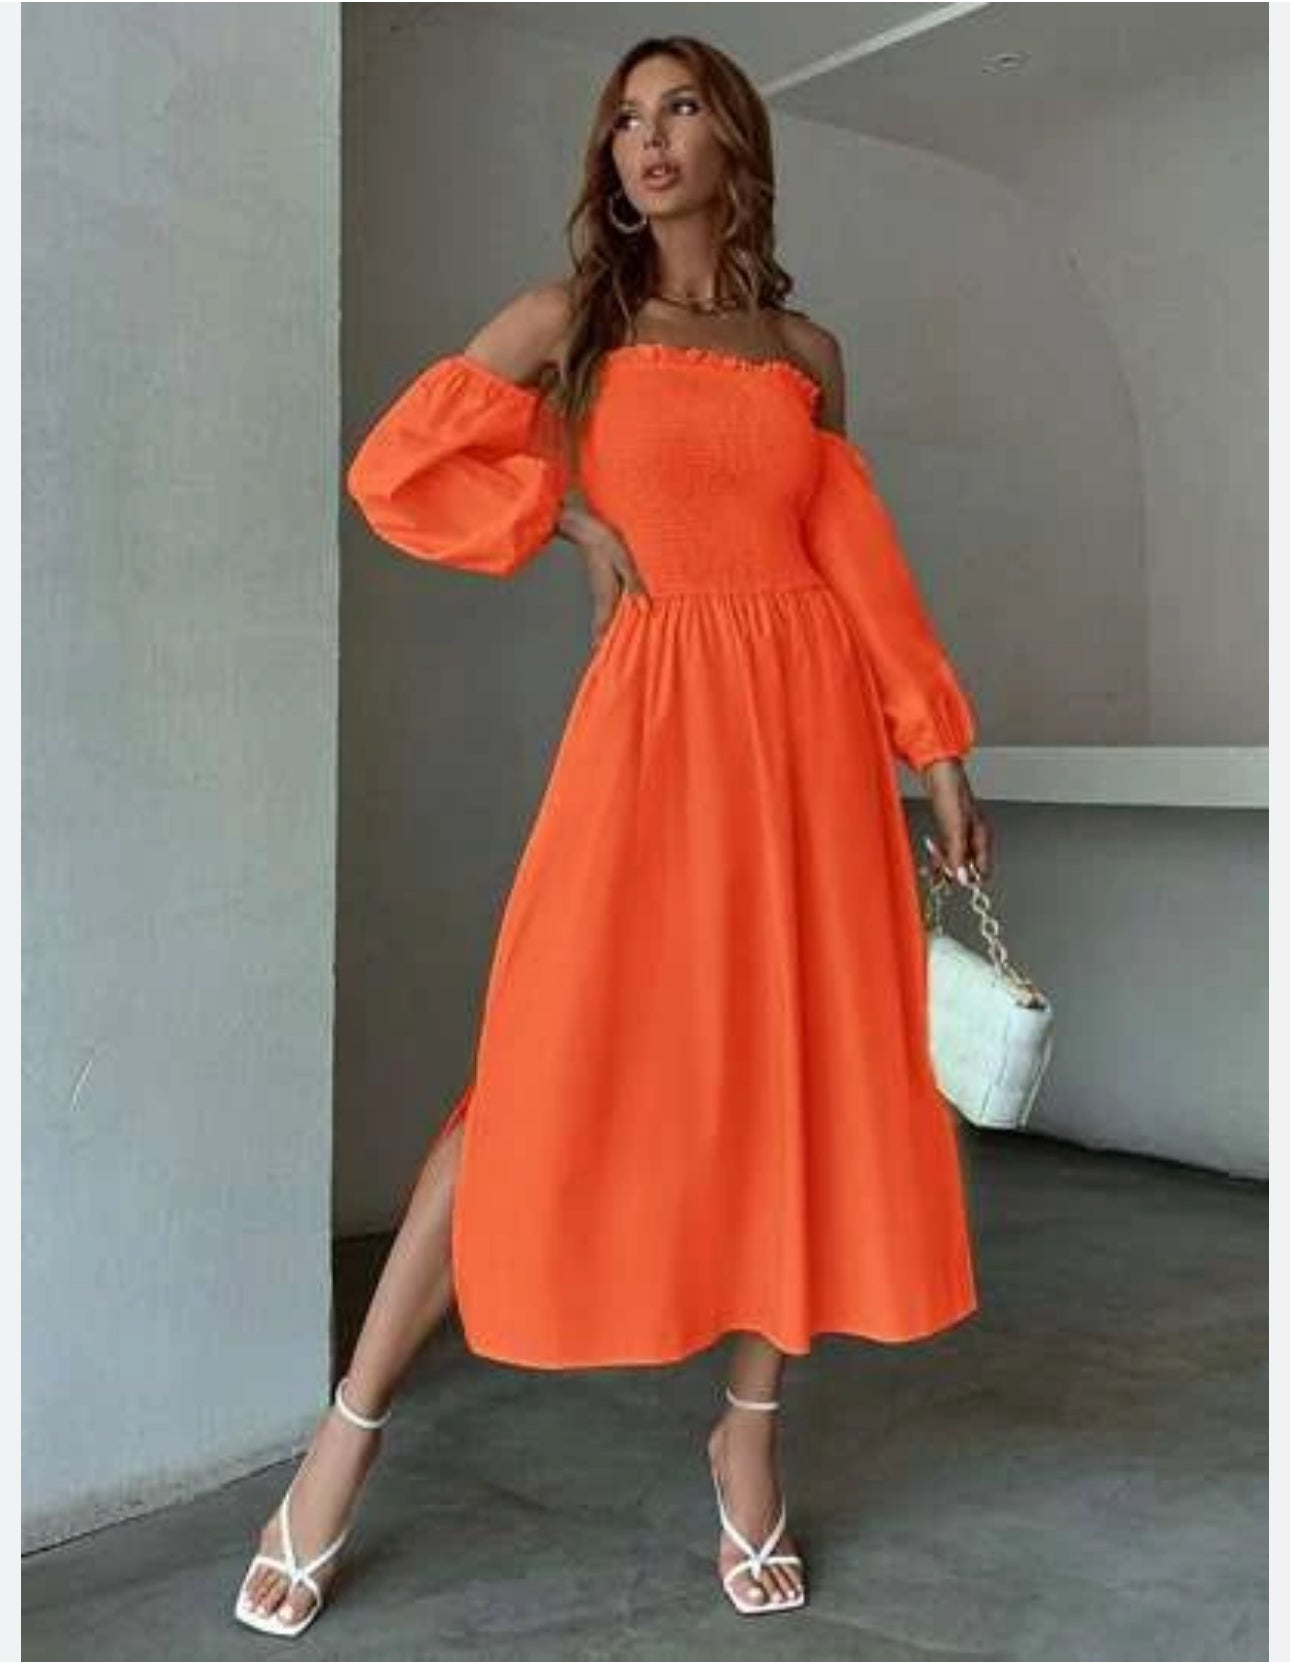 Anderson Dress Orange